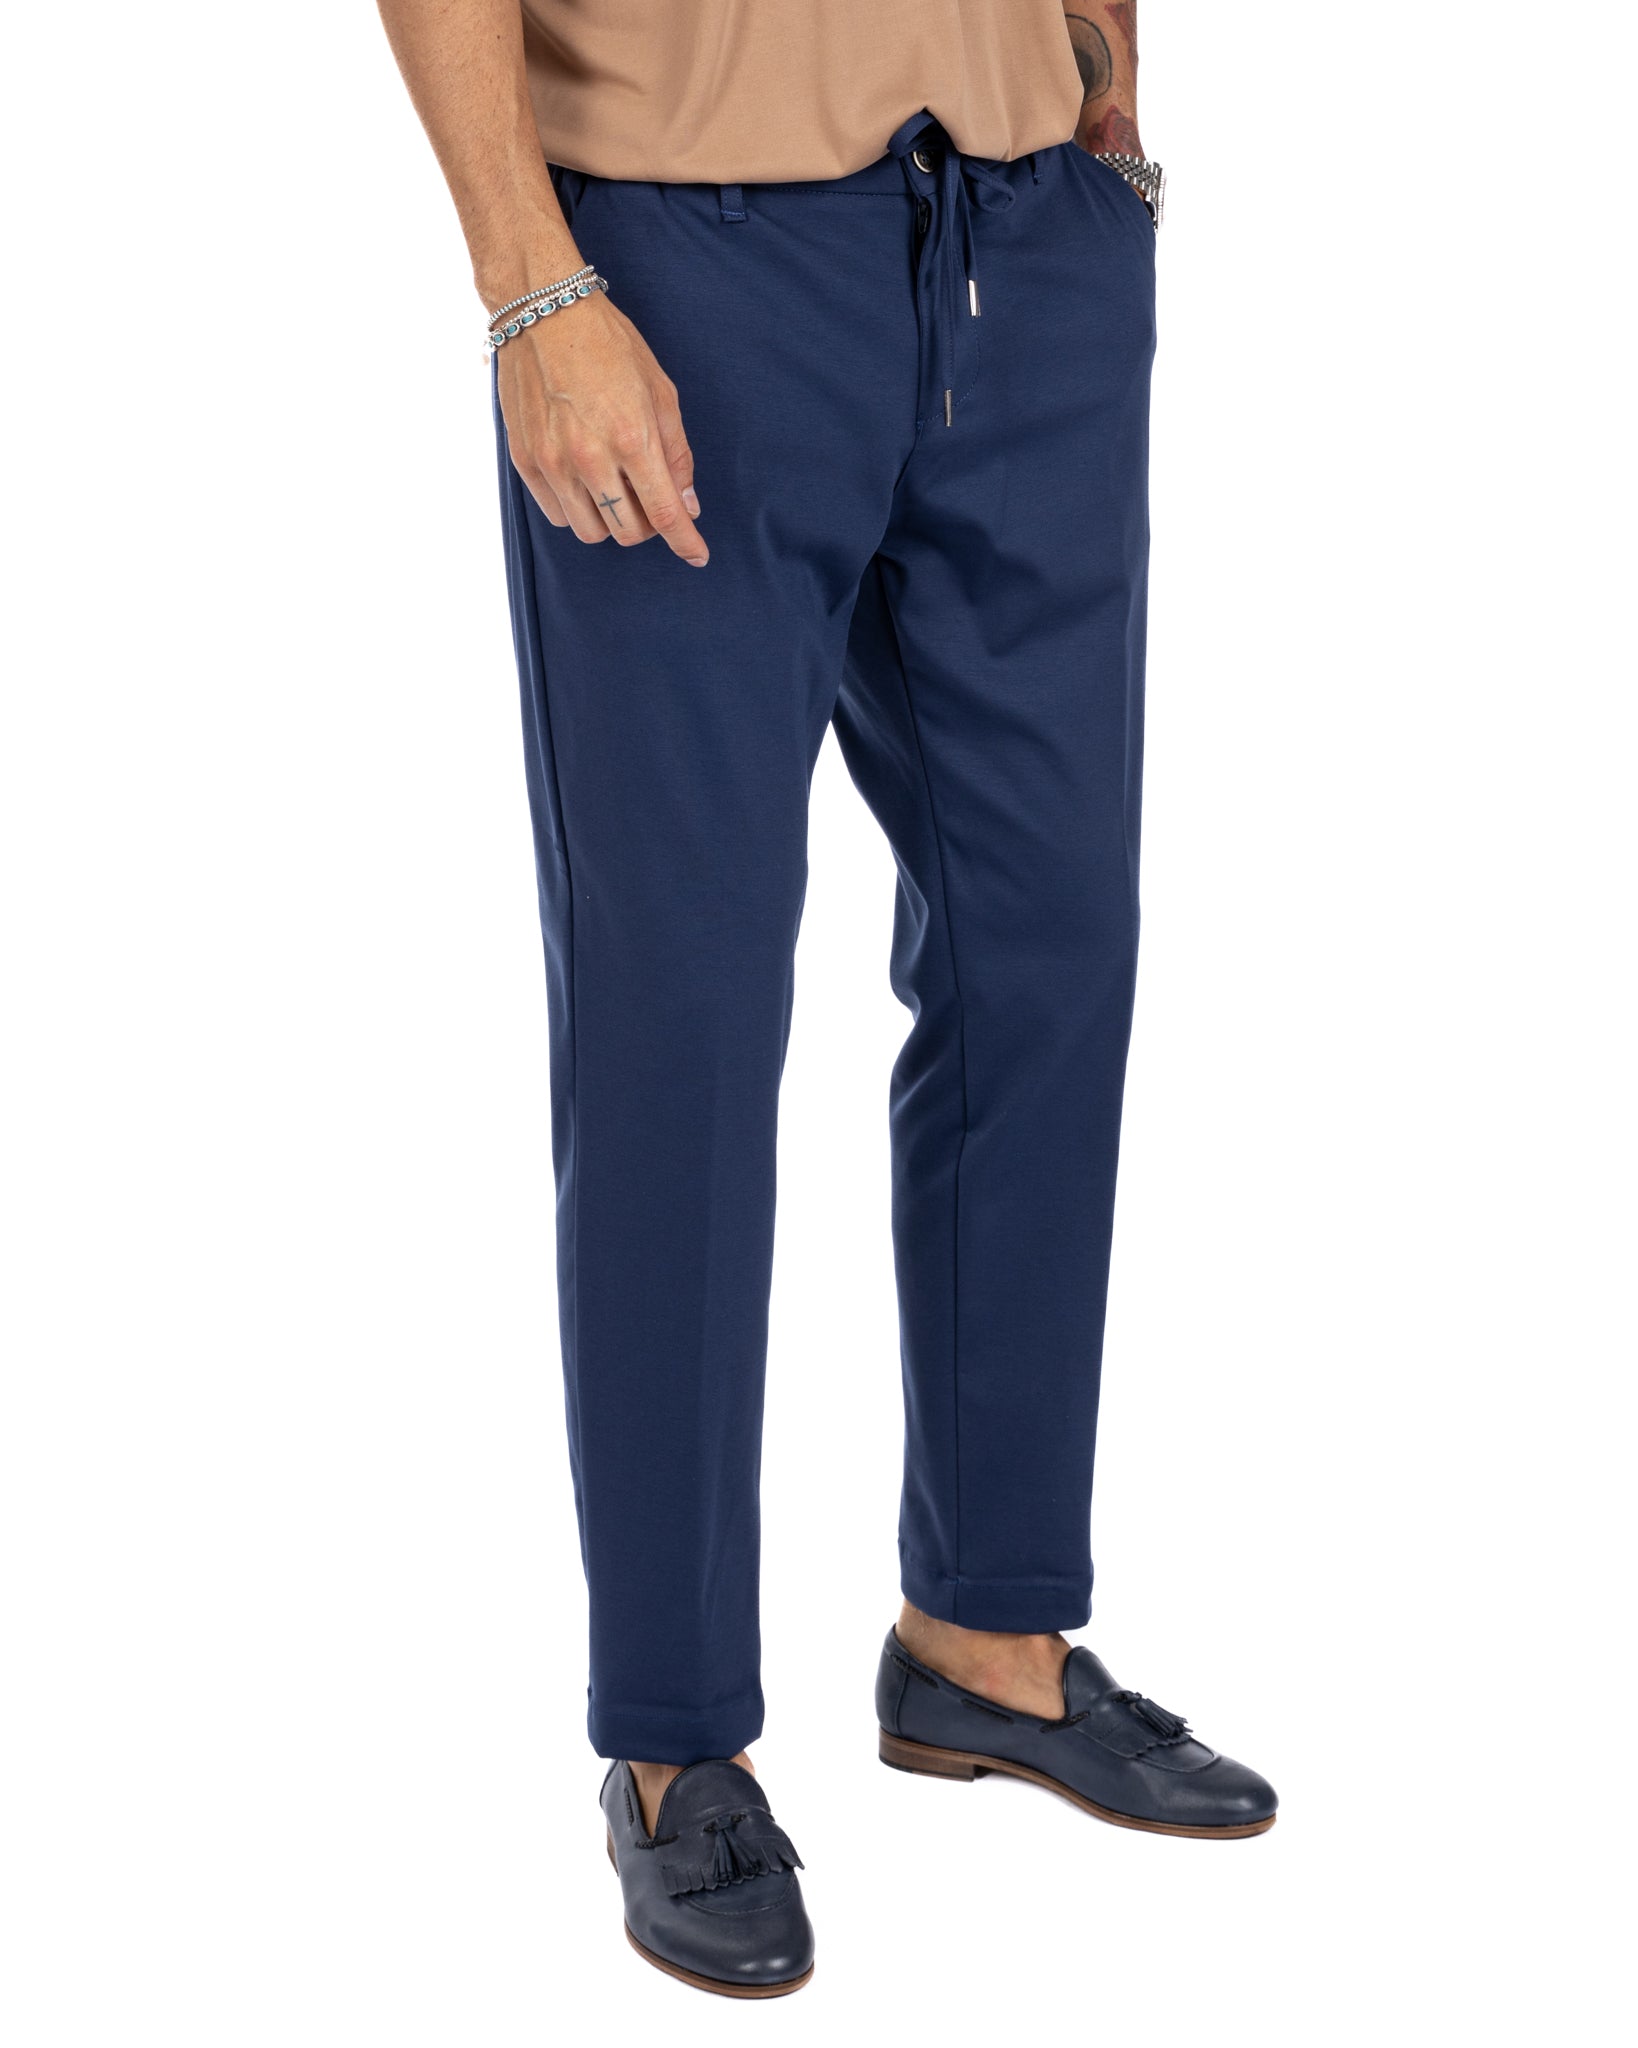 Shelby - cornflower blue cotton trousers